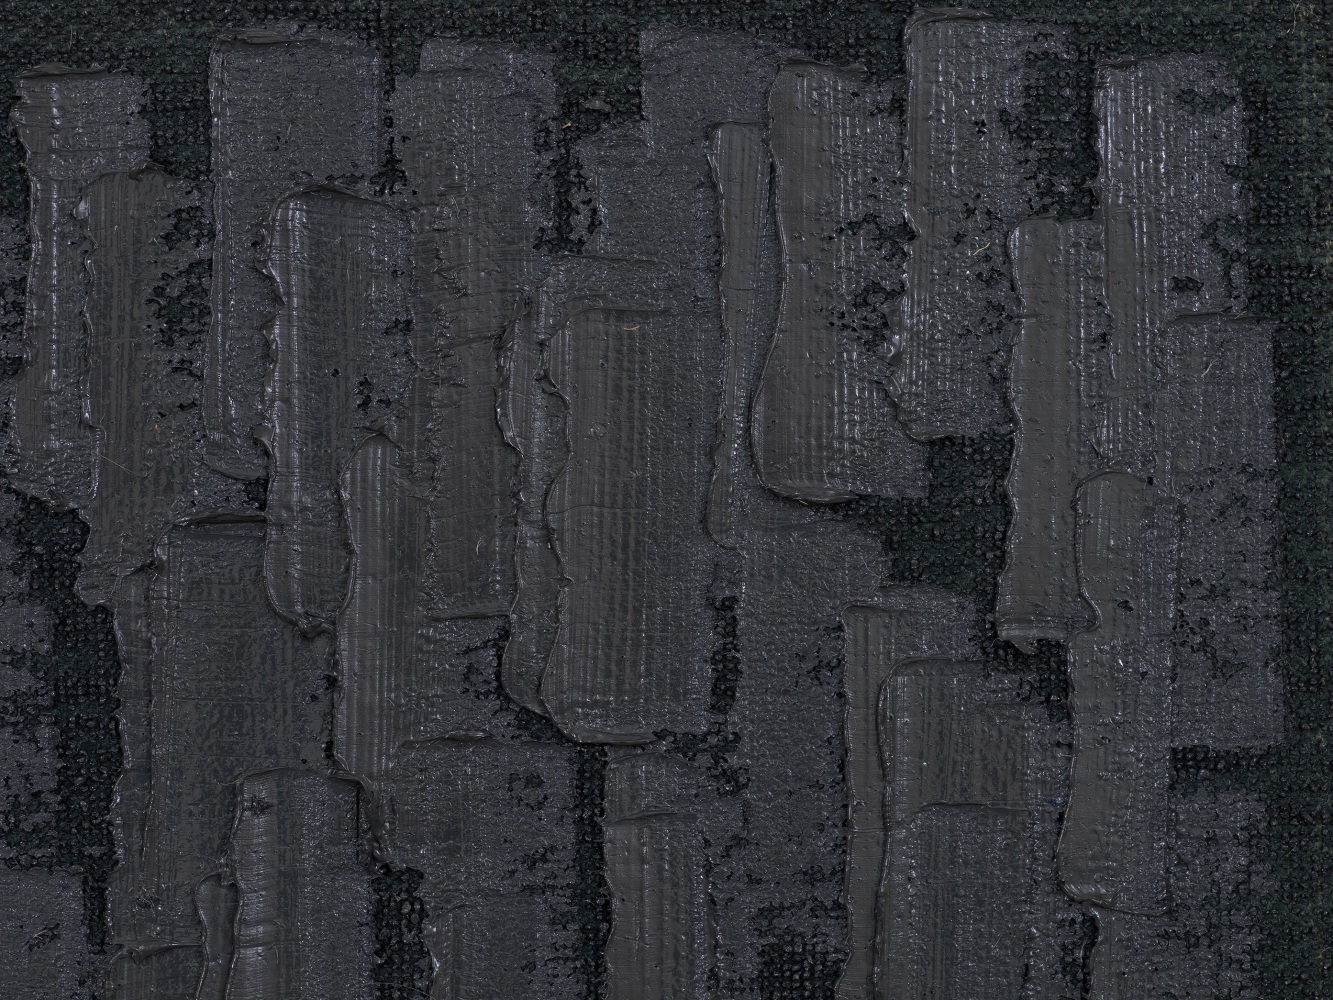 Ha Chong-Hyun (b. 1935) Conjunction 20-57, 2020 Oil on hemp cloth 46.06 x 35.83 inches 117 x 91 cm